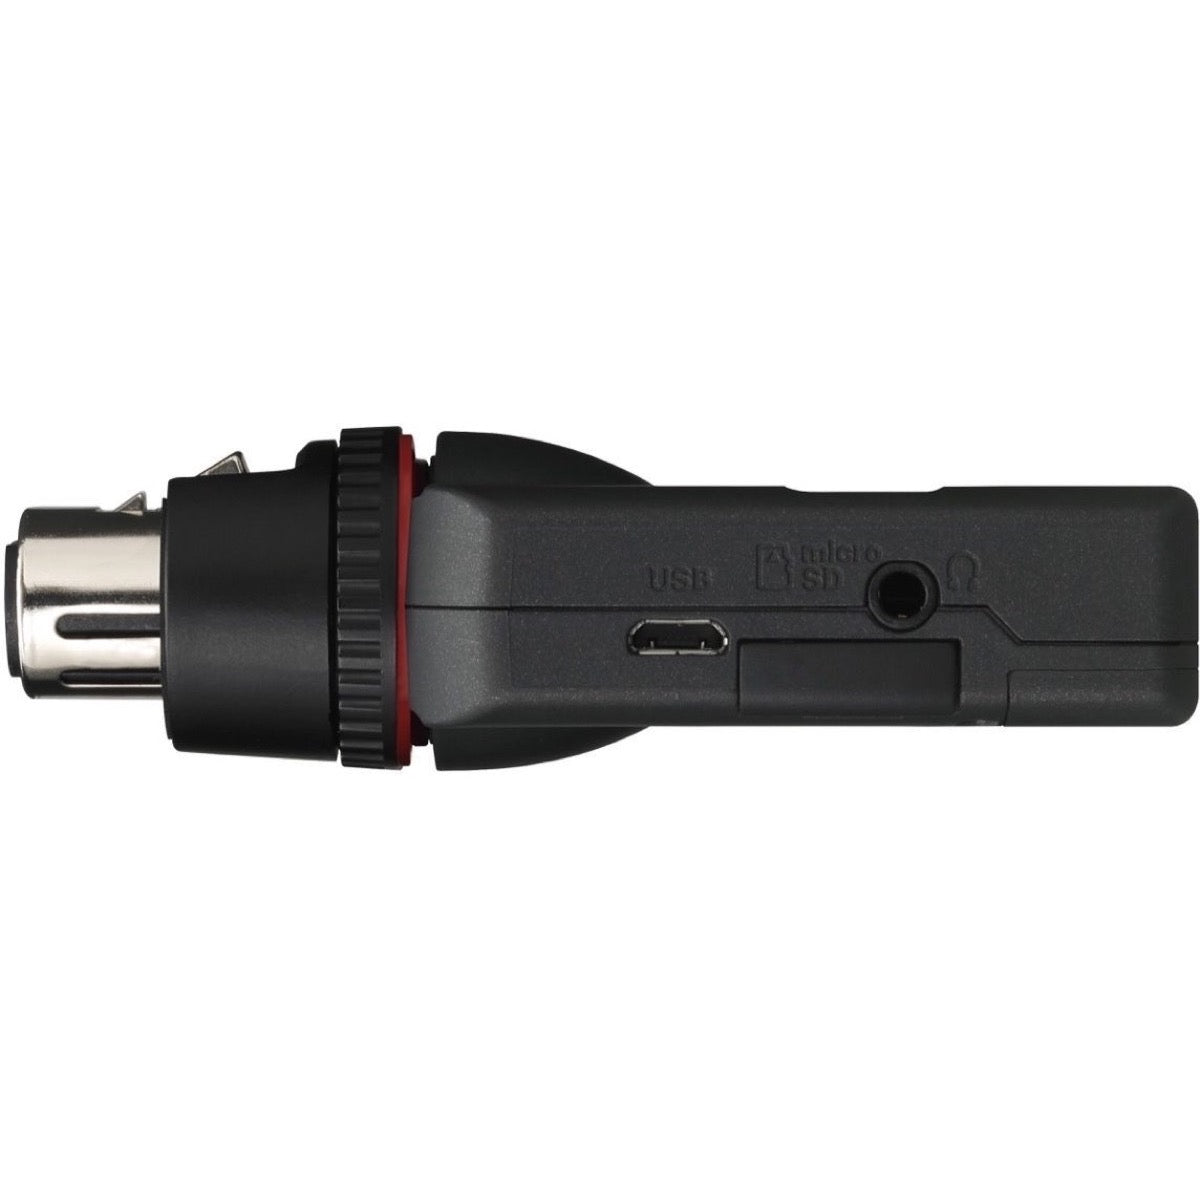 Tascam DR-10X Plug-On Linear PCM Digital Recorder